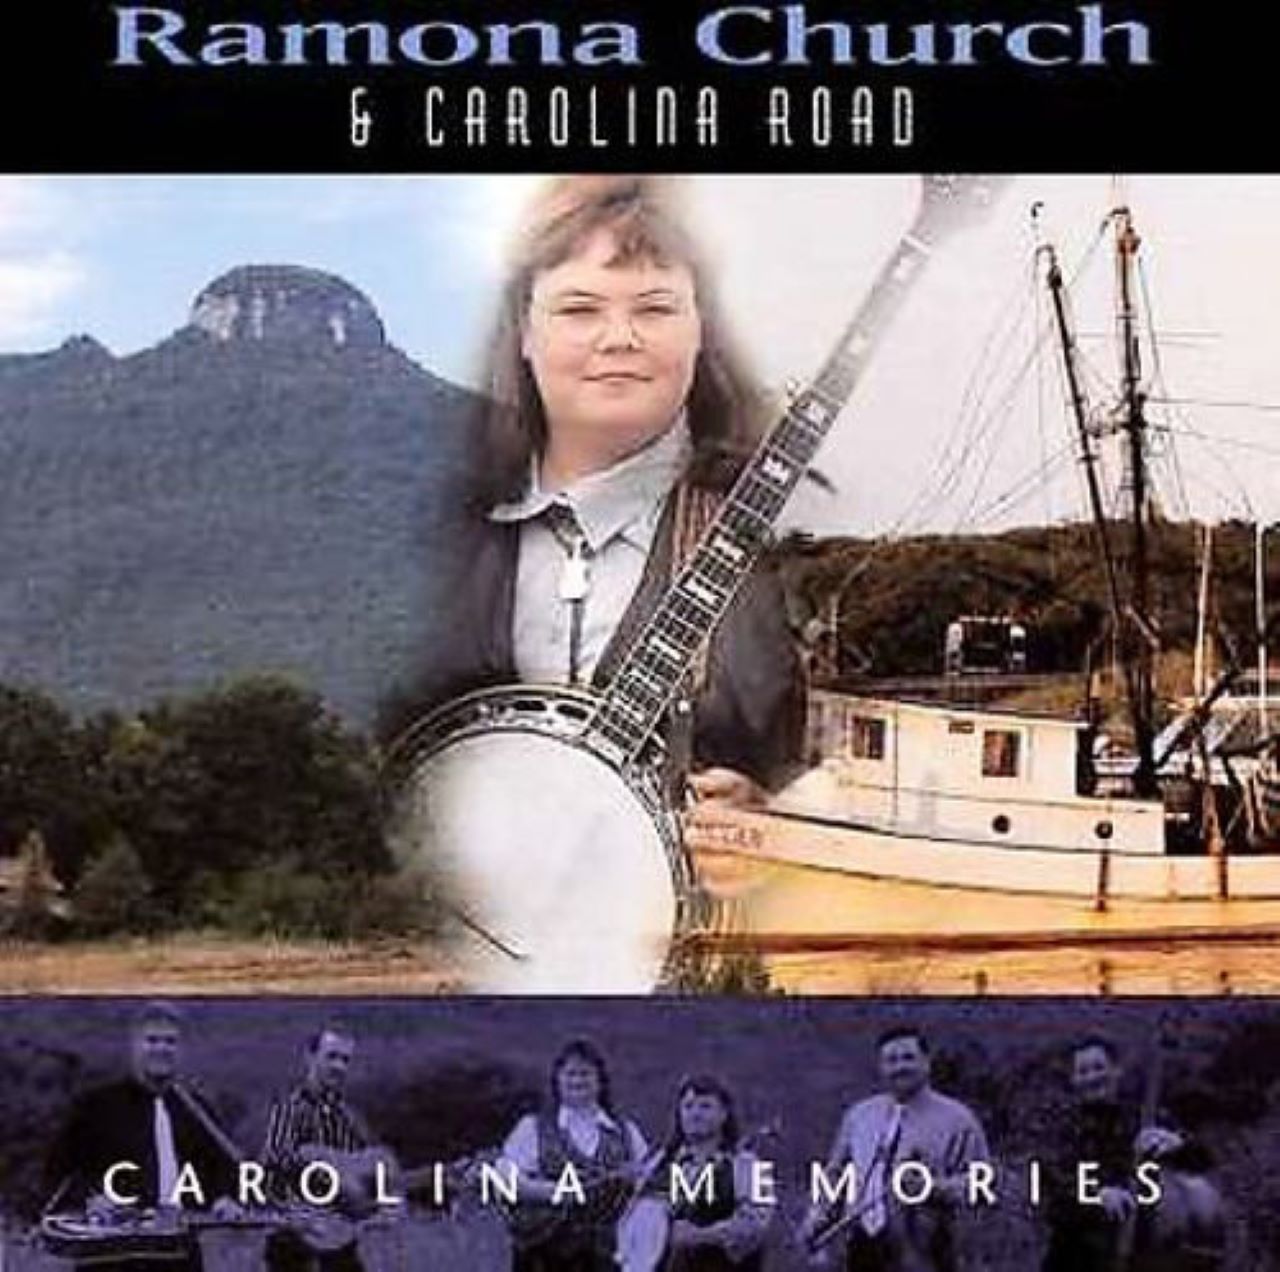 Ramona Church & Carolina Road - Carolina Memories cover album